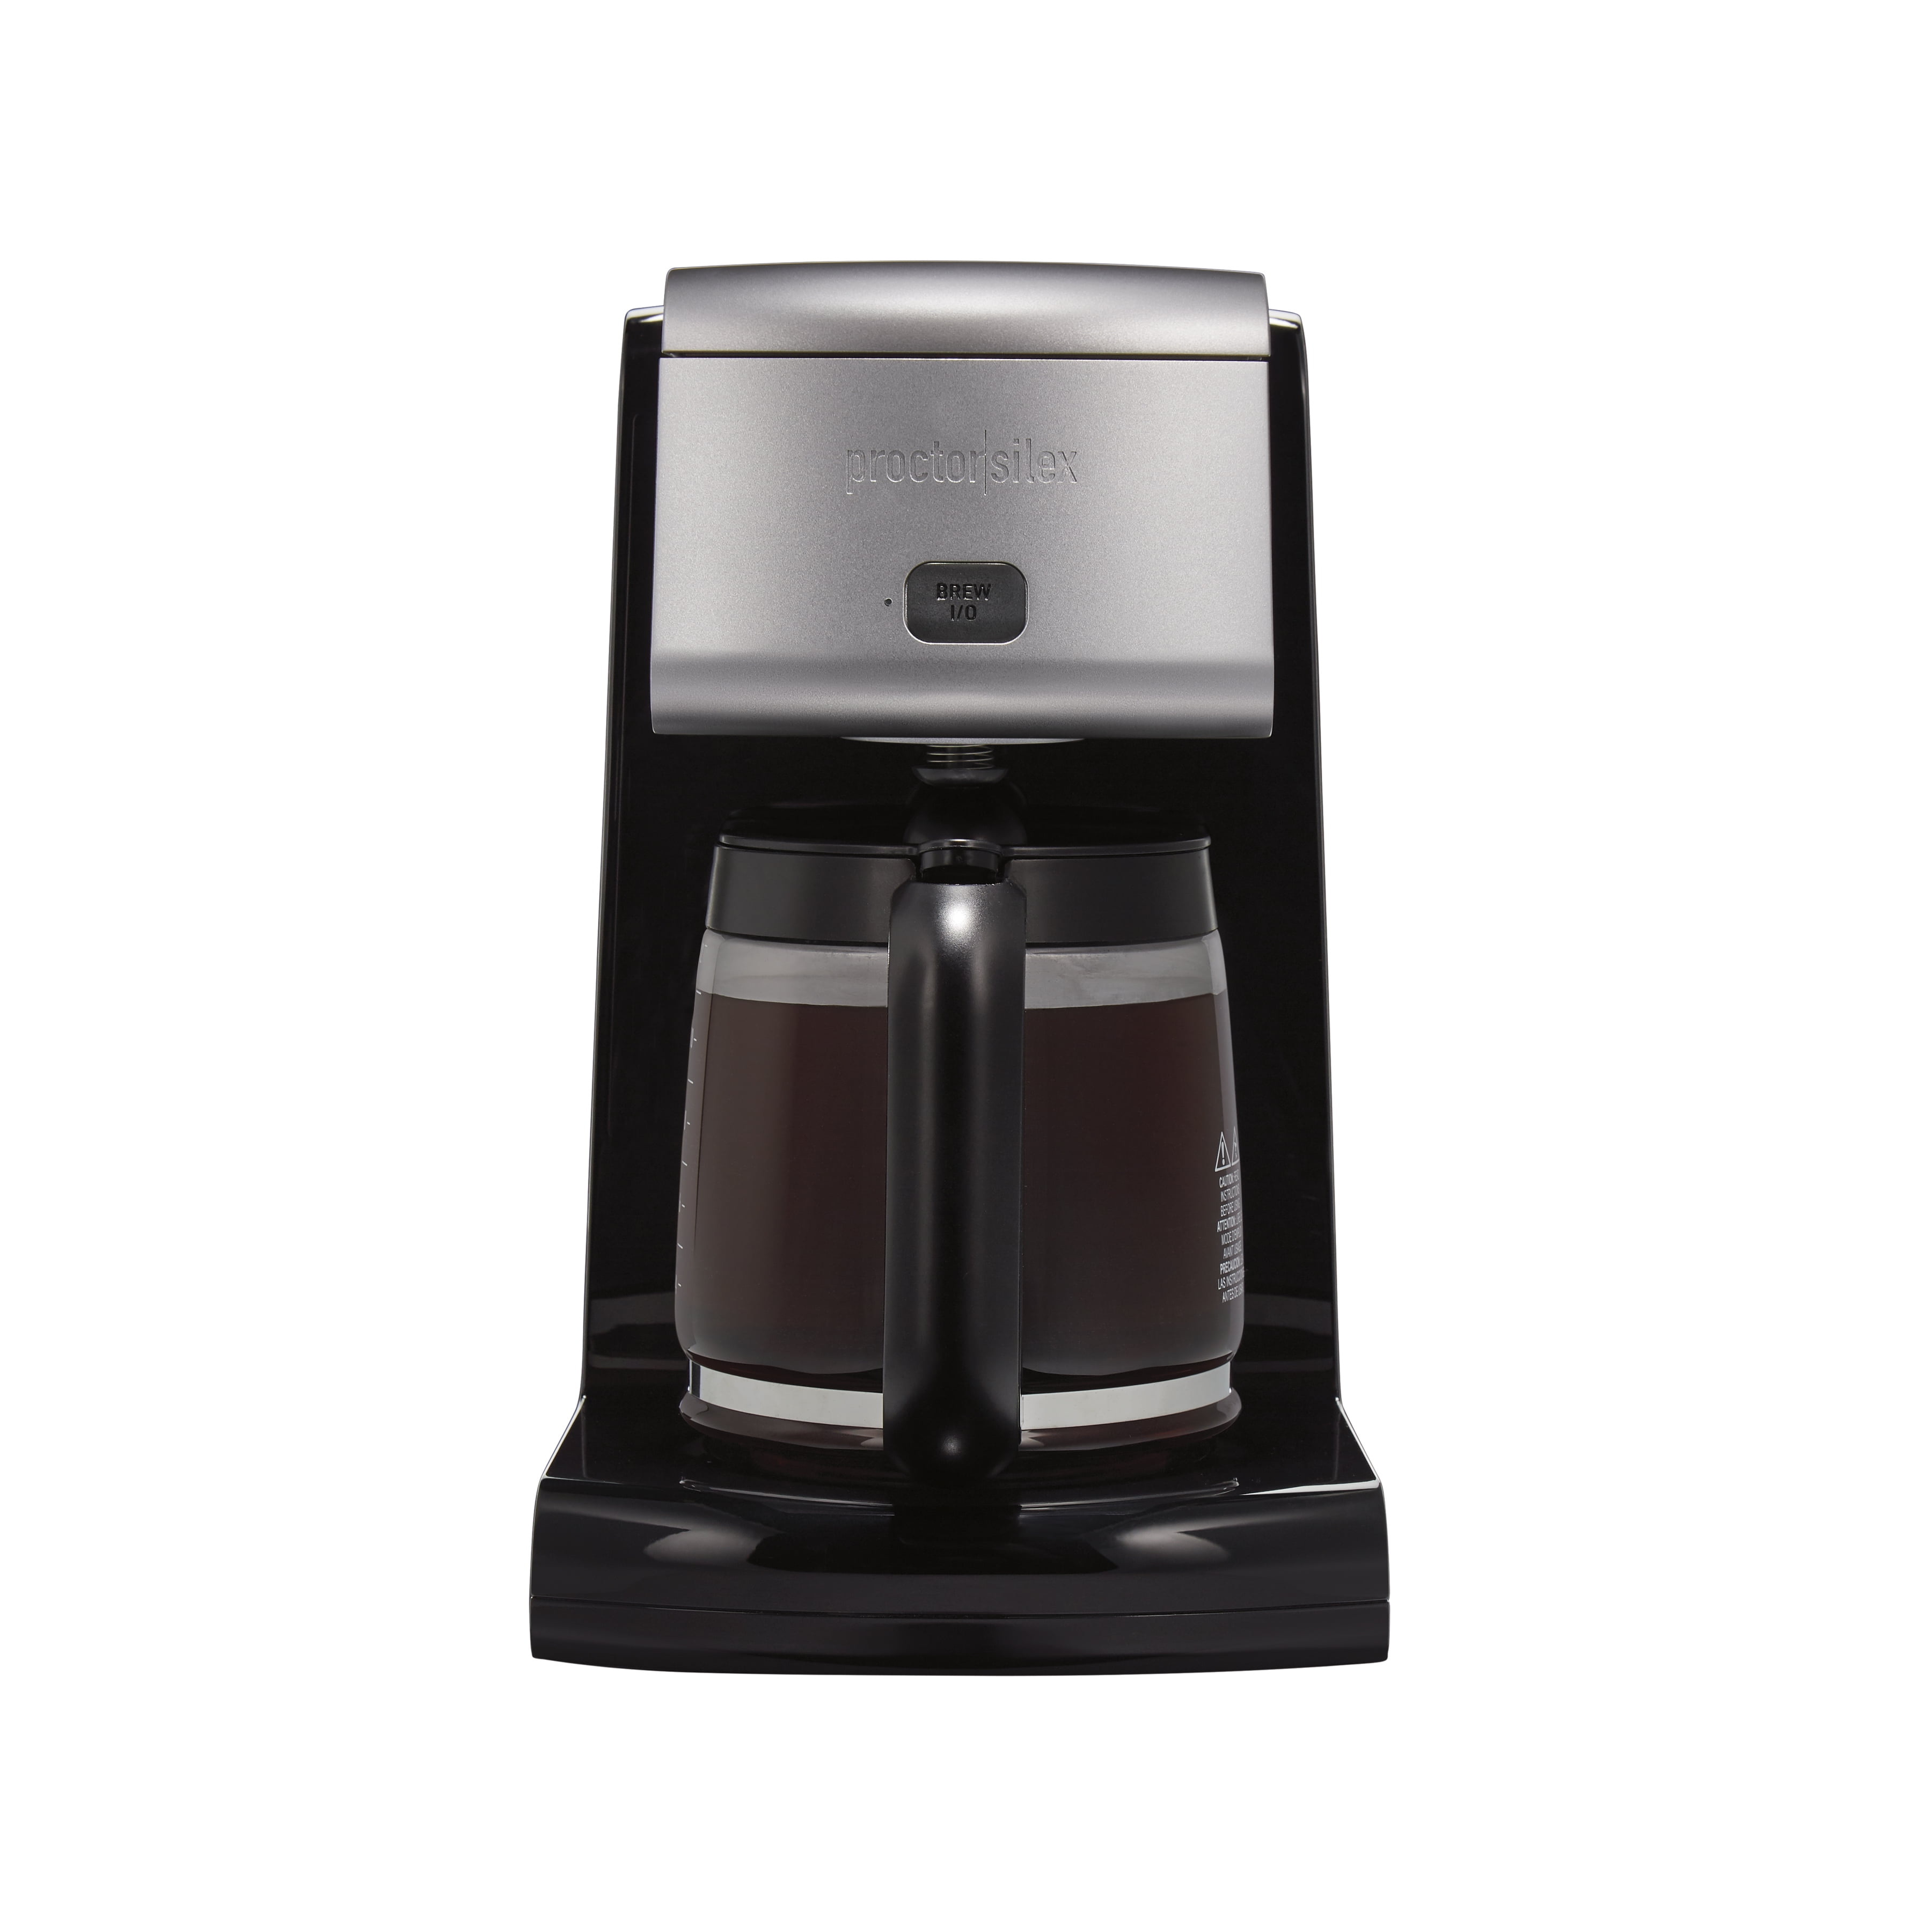 Proctor Silex - 4-Cup Coffeemaker - Black